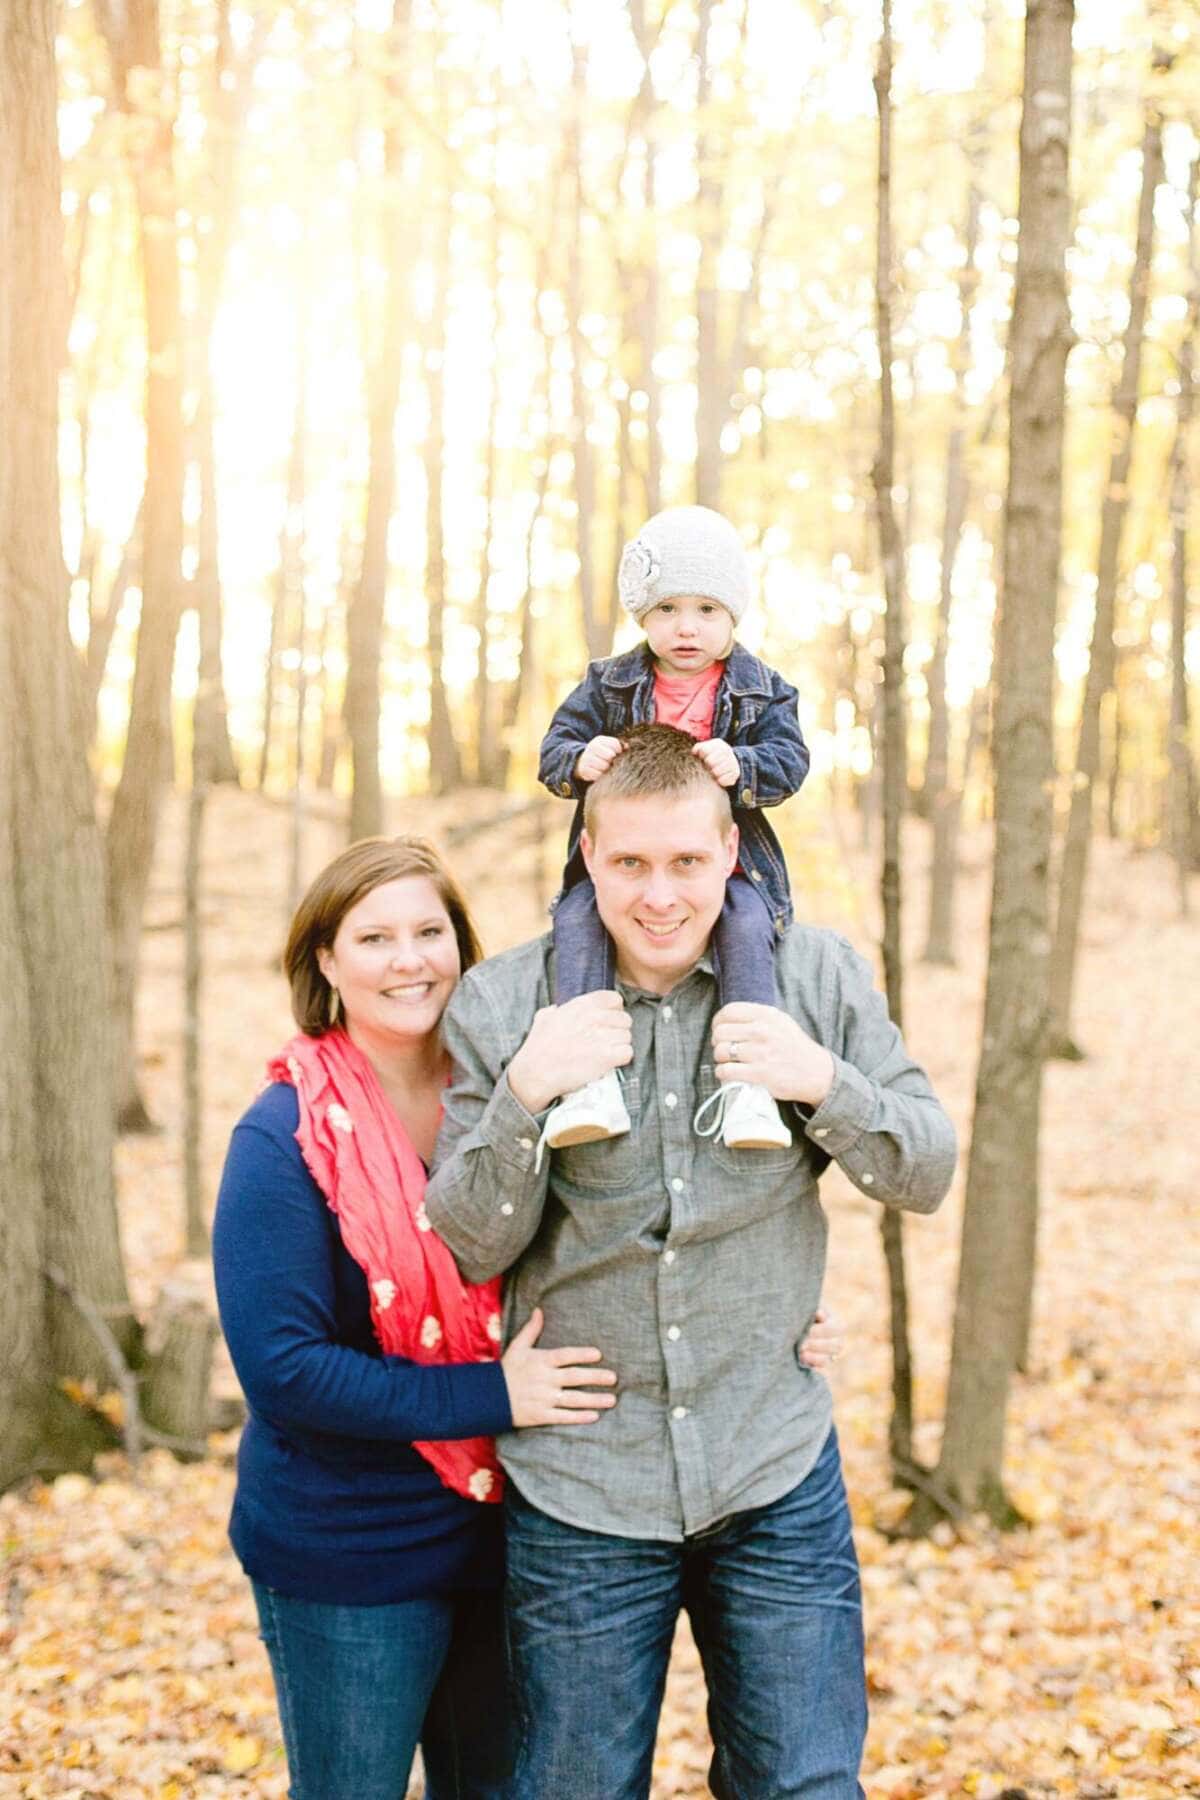 Minnesota Winter Family Photos